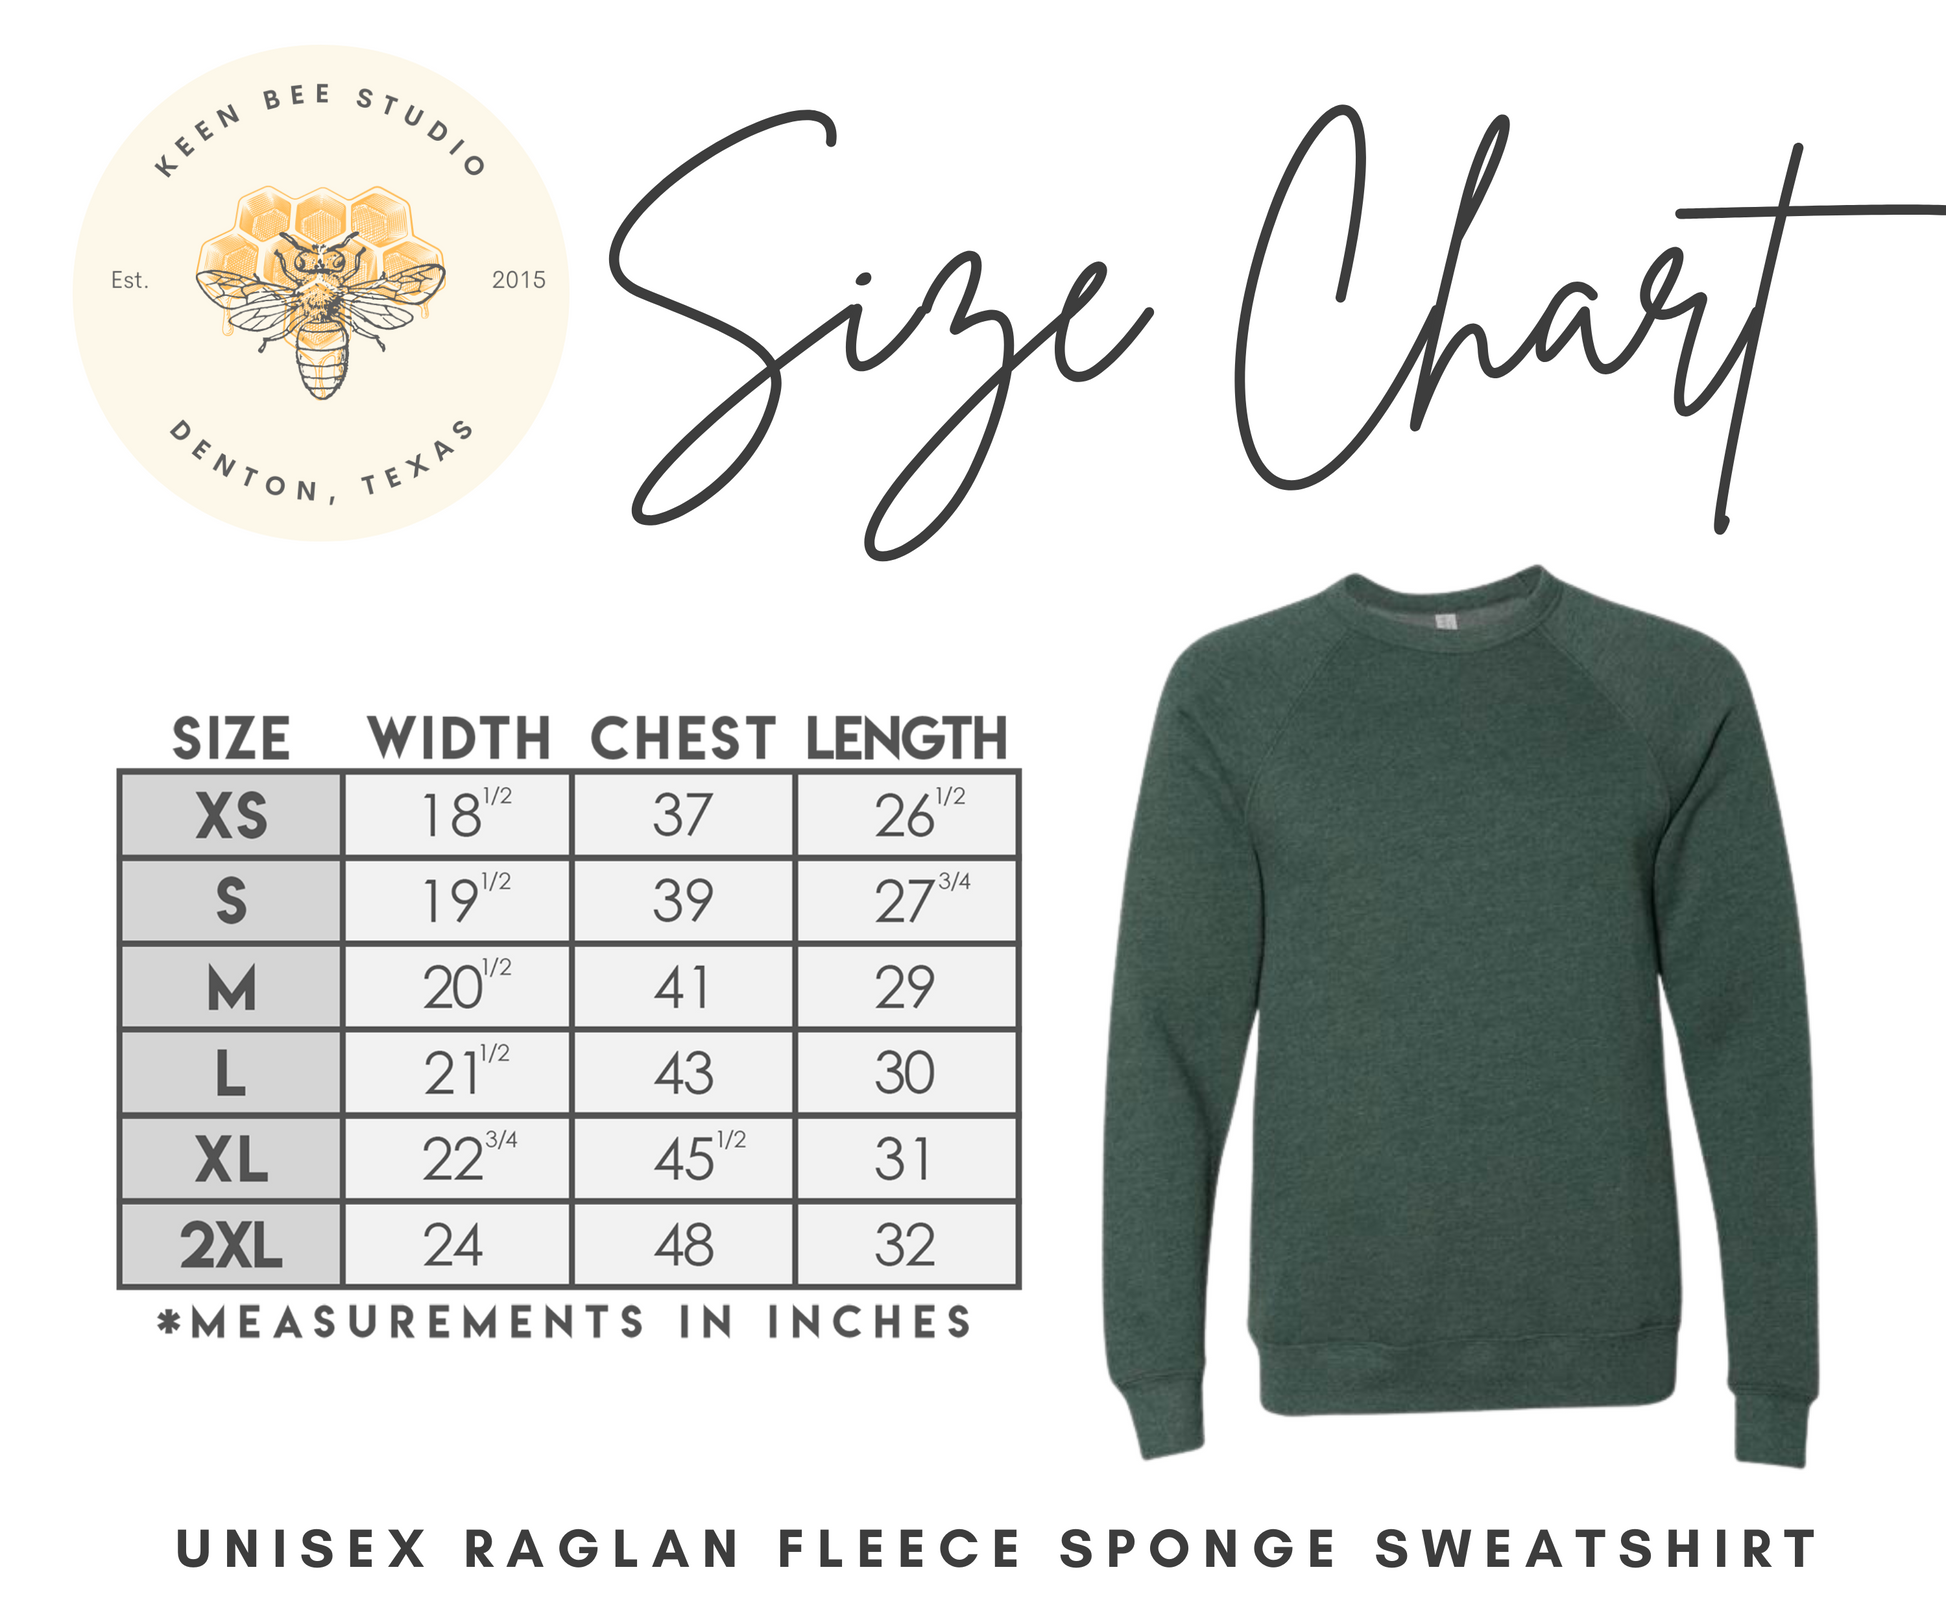 Book Club Varsity Sweatshirt - Premium Blend, Soft Texture - Reading Sweatshirt - Size Chart